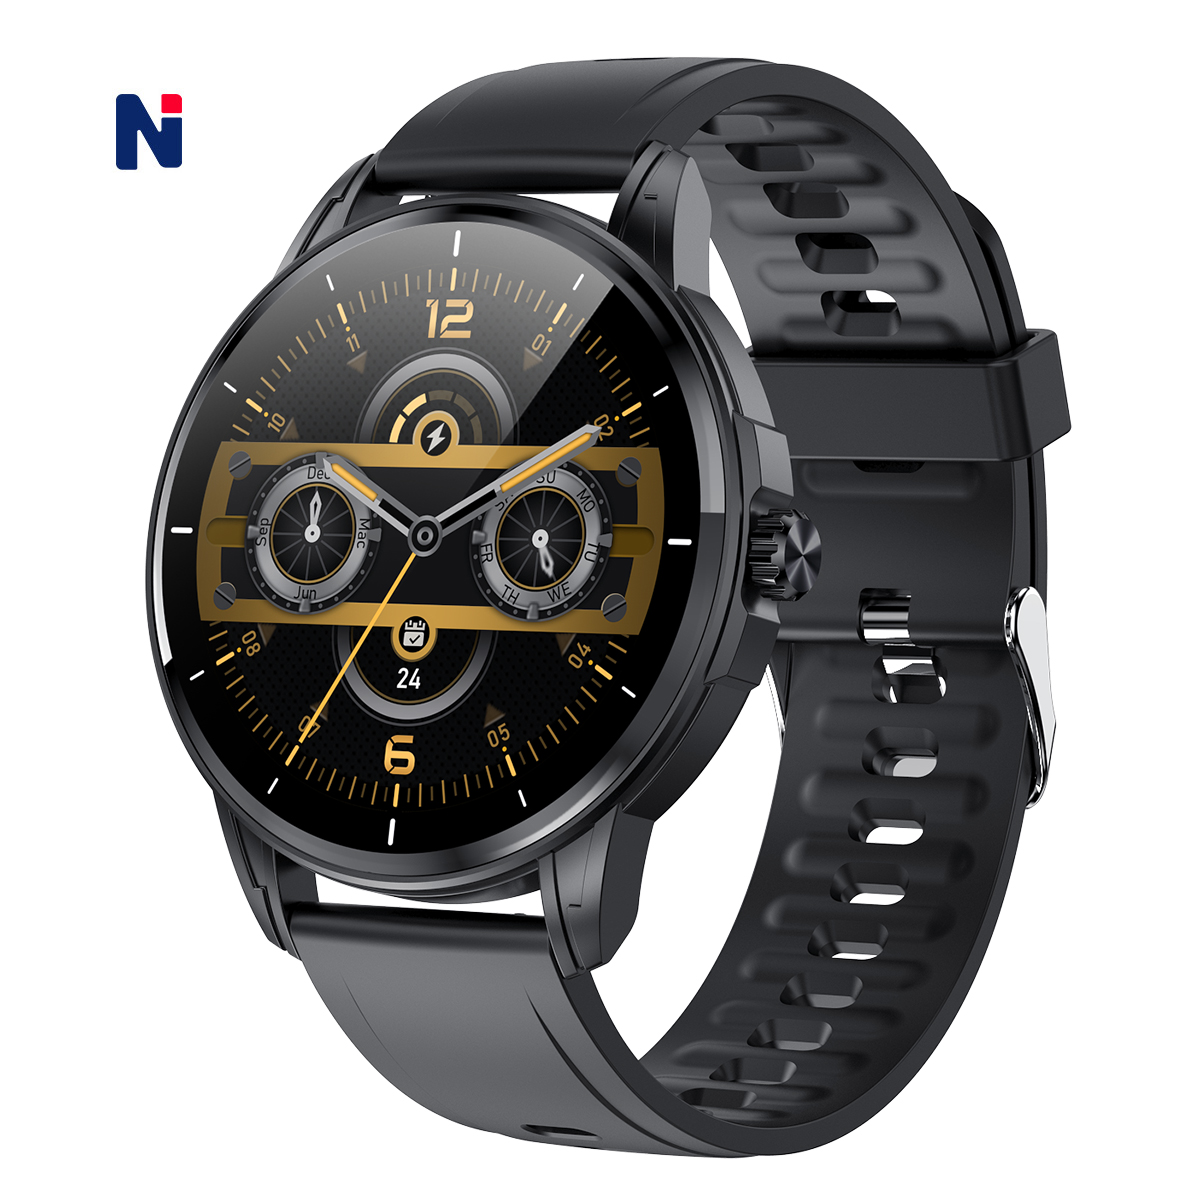 Productos con descuento 4G Series 6 Smart Watch Fitness NHK04 Smart Bracelet